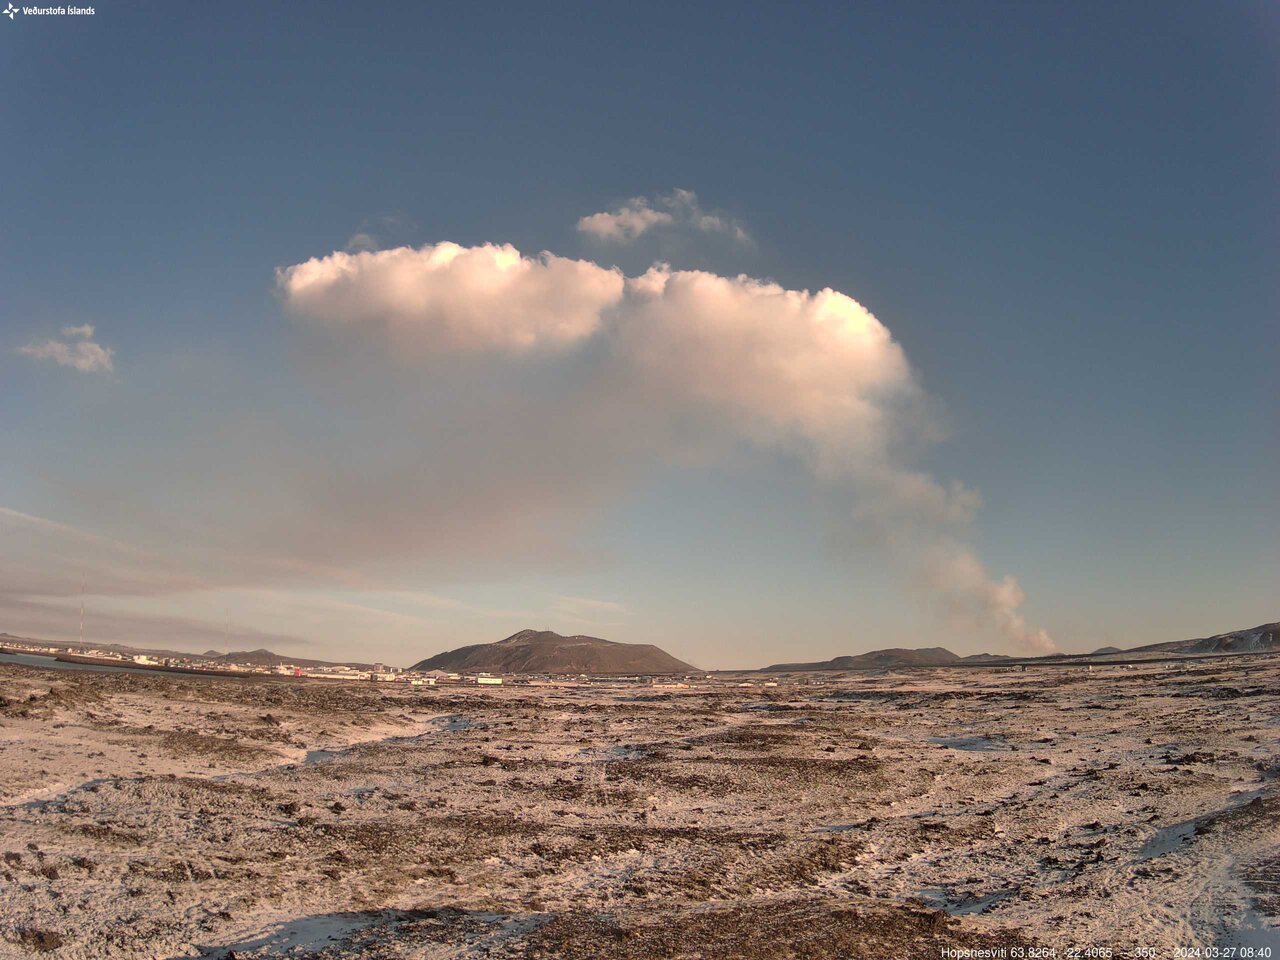 The pyrocumulonimbus over the eruption area (image: IMO)